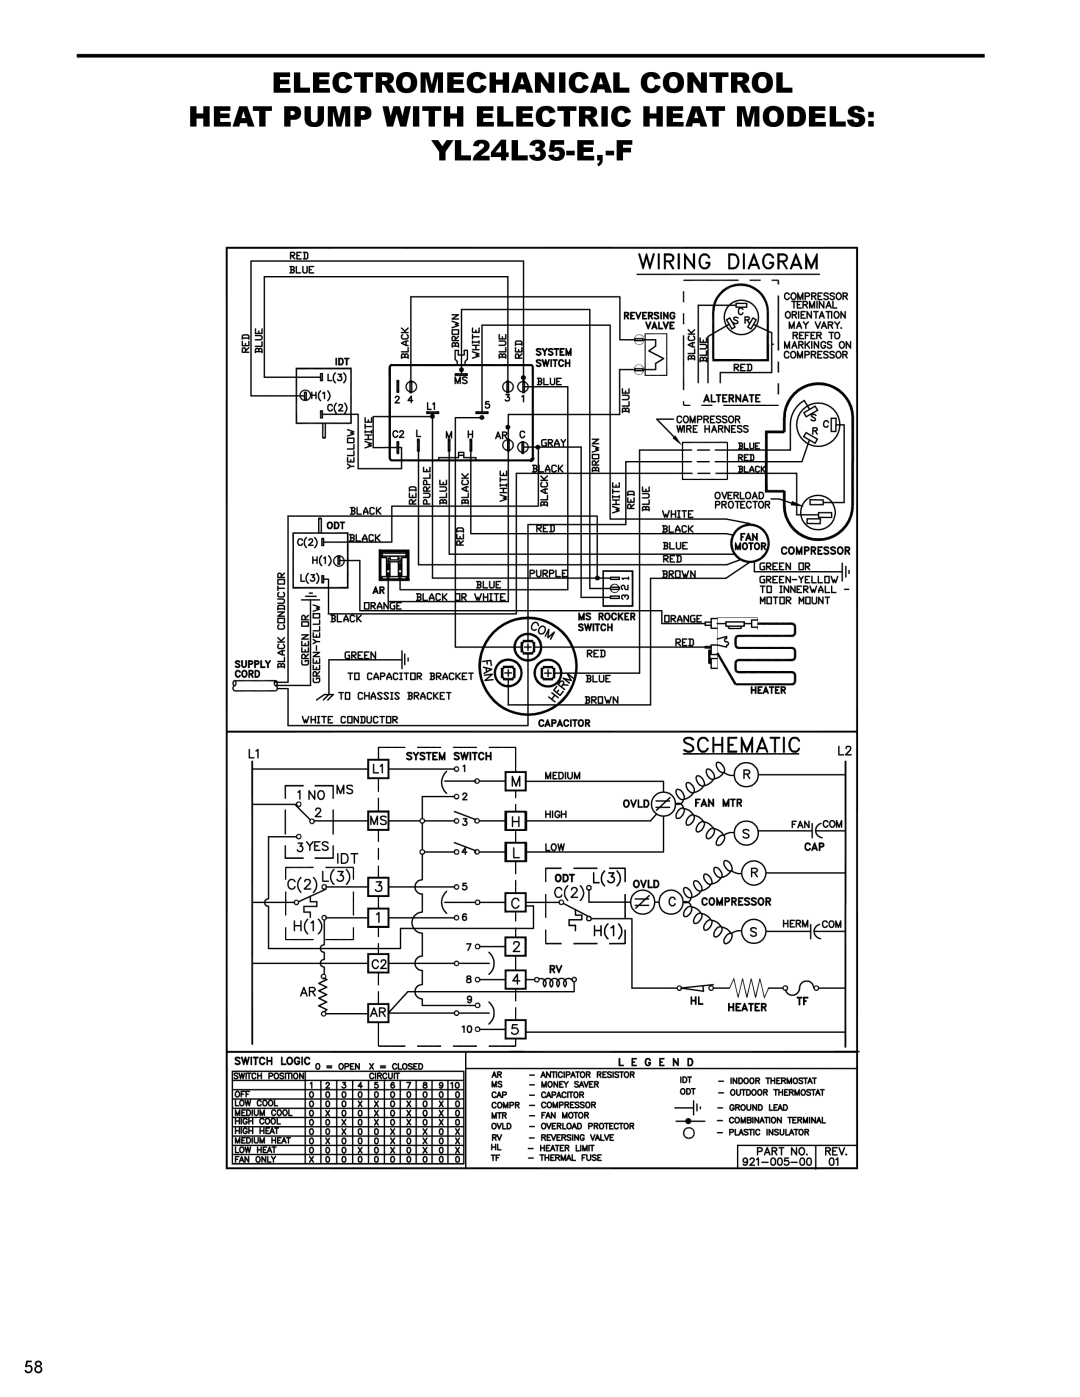 Friedrich 2008, 2009 service manual HEAT PUMP WITH ELECTRIC HEAT MODELS YL24L35-E,-F, Electromechanical Control 